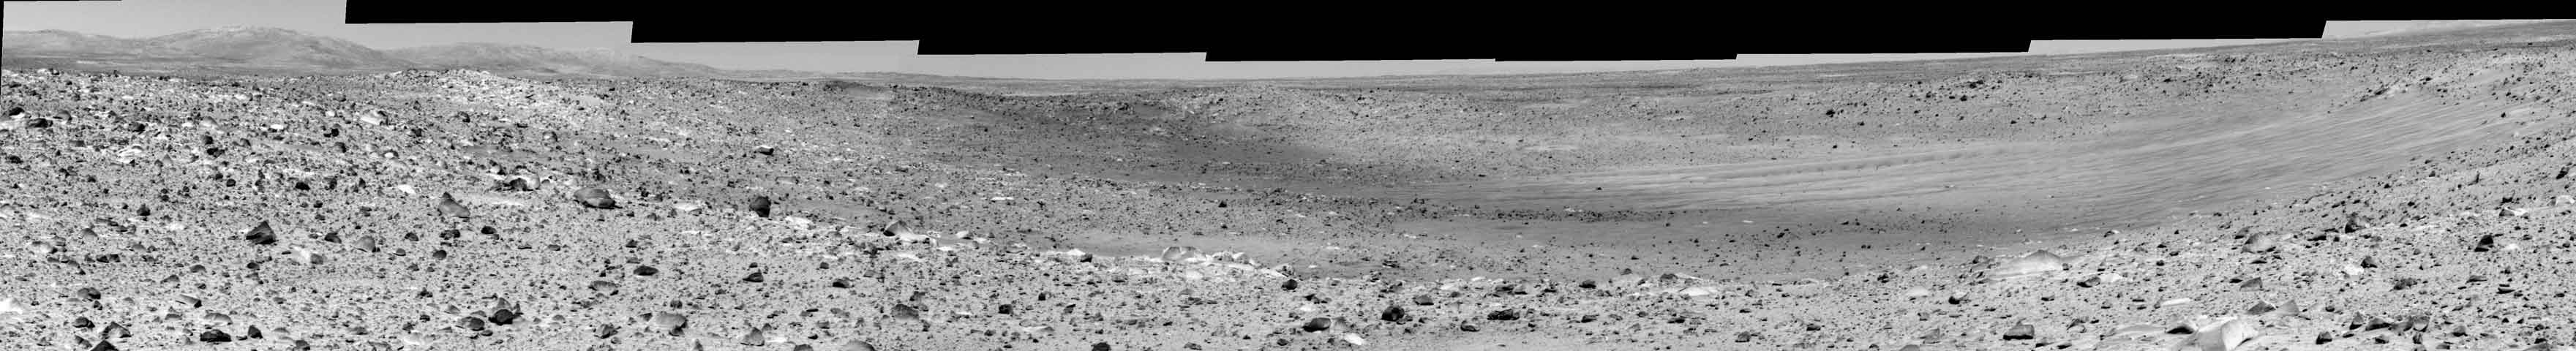 Missoula Cráter en Marte